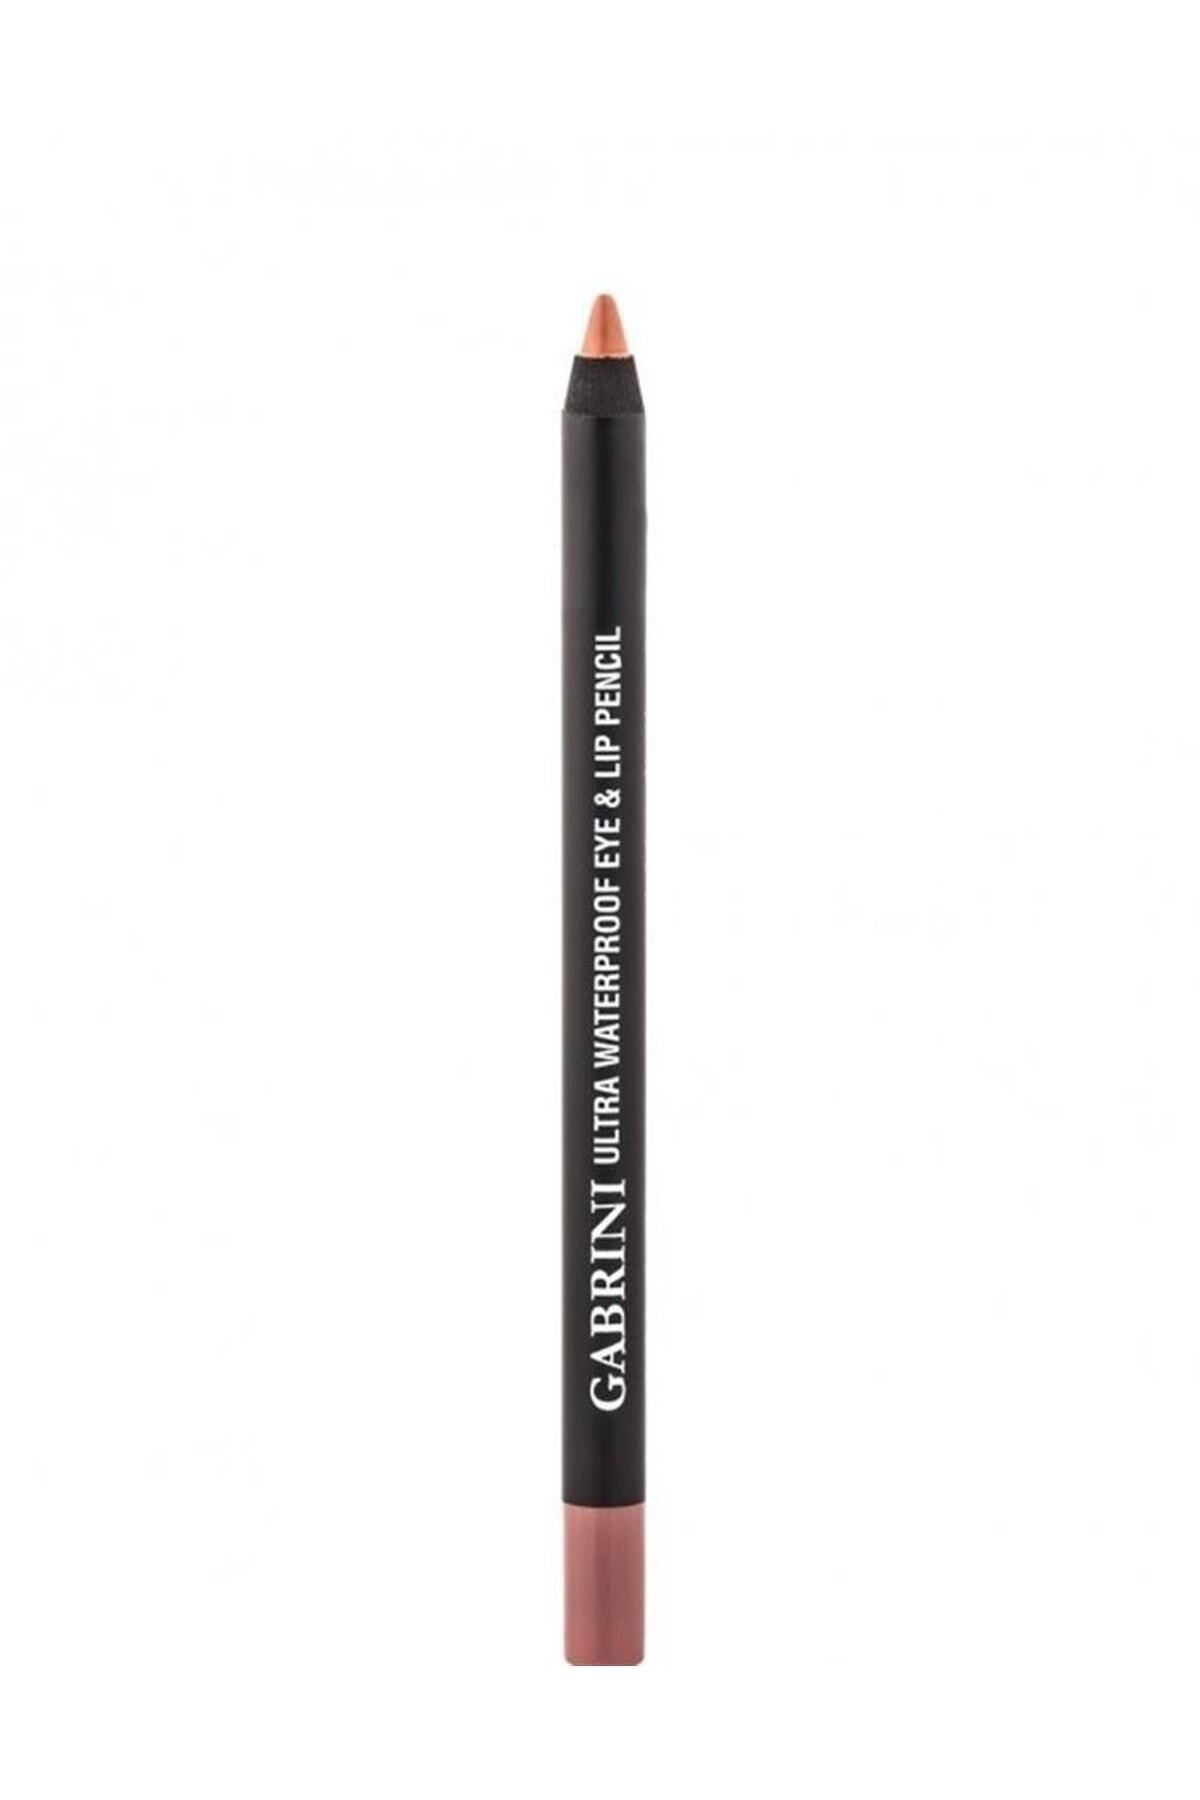 Gabrini Ultra Waterproof Eye & Lip Pencil 26